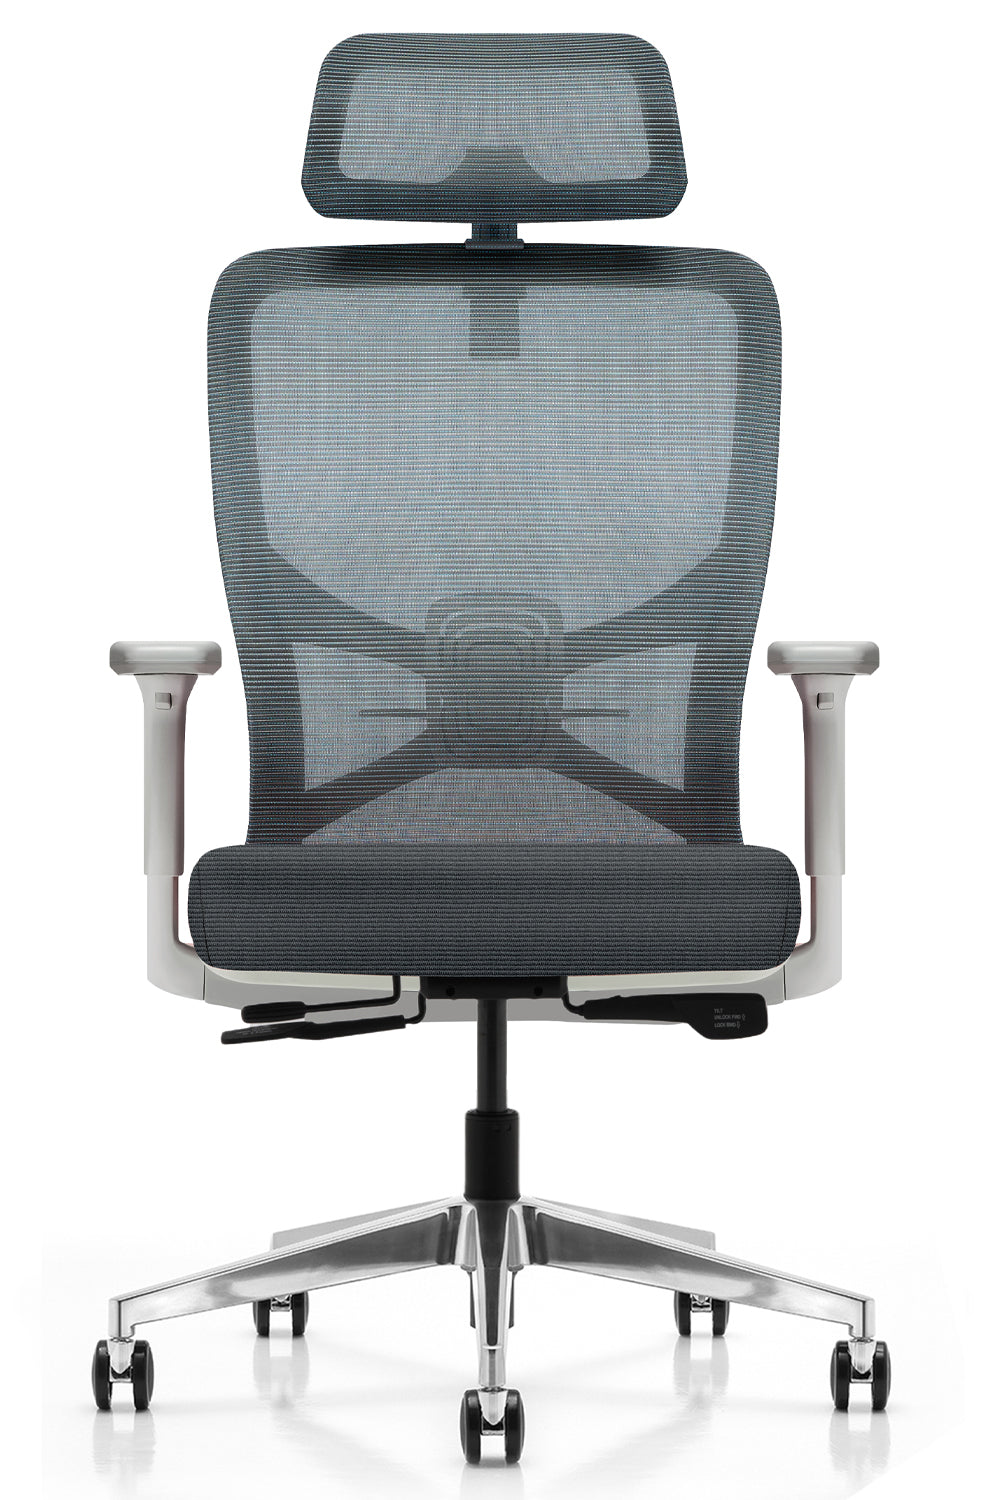 Calvin High Back Ergonomic Cushion Executive Office Chair With Aluminum Die cast Base And 3D Armrest  - Black